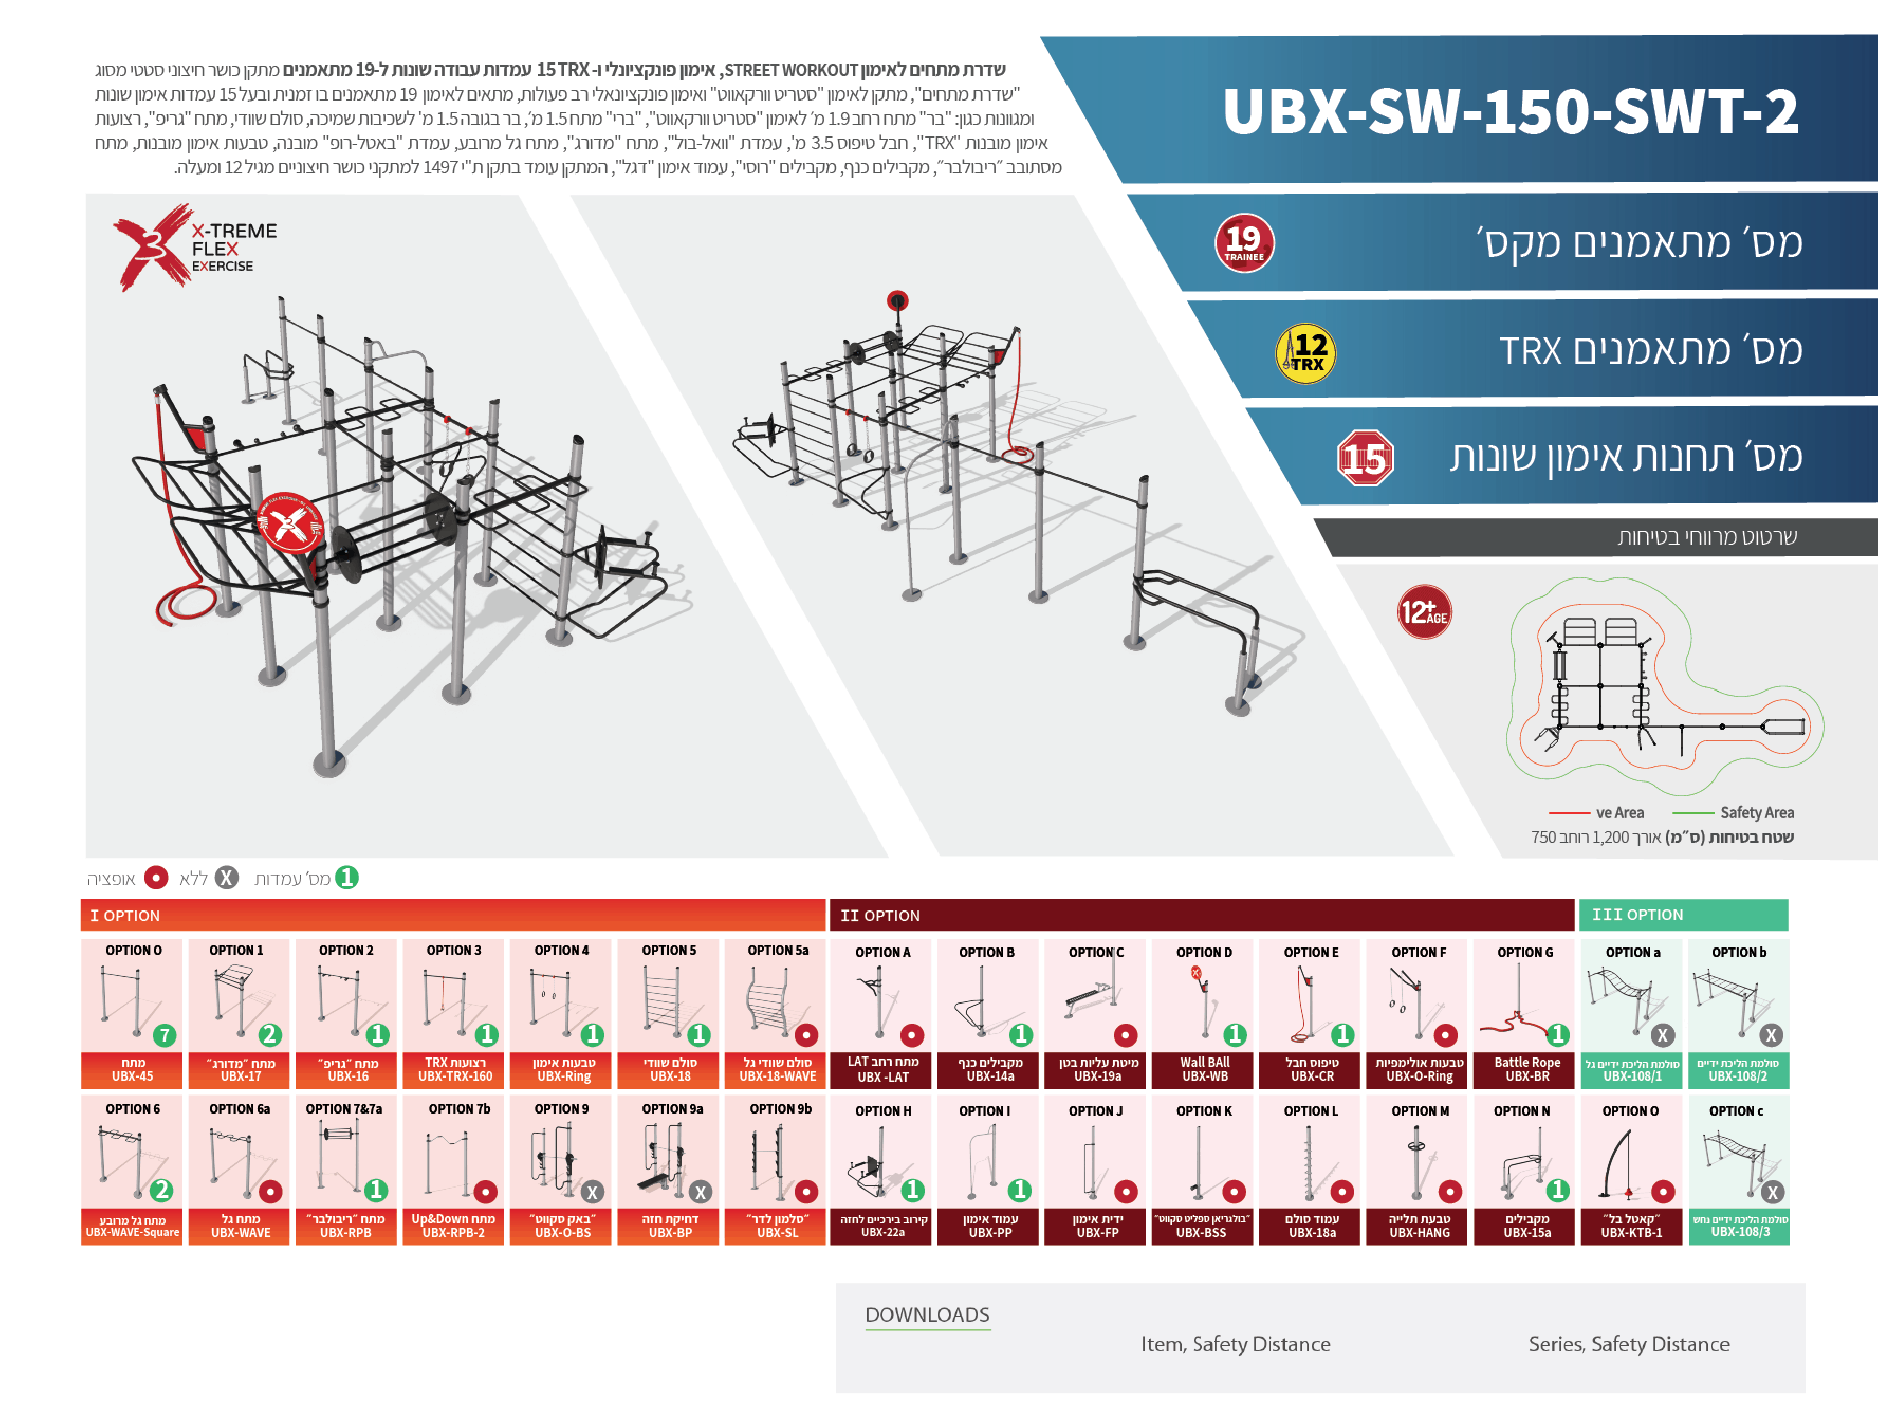 ubx-sw-150 אורבניקס - מתקן כושר